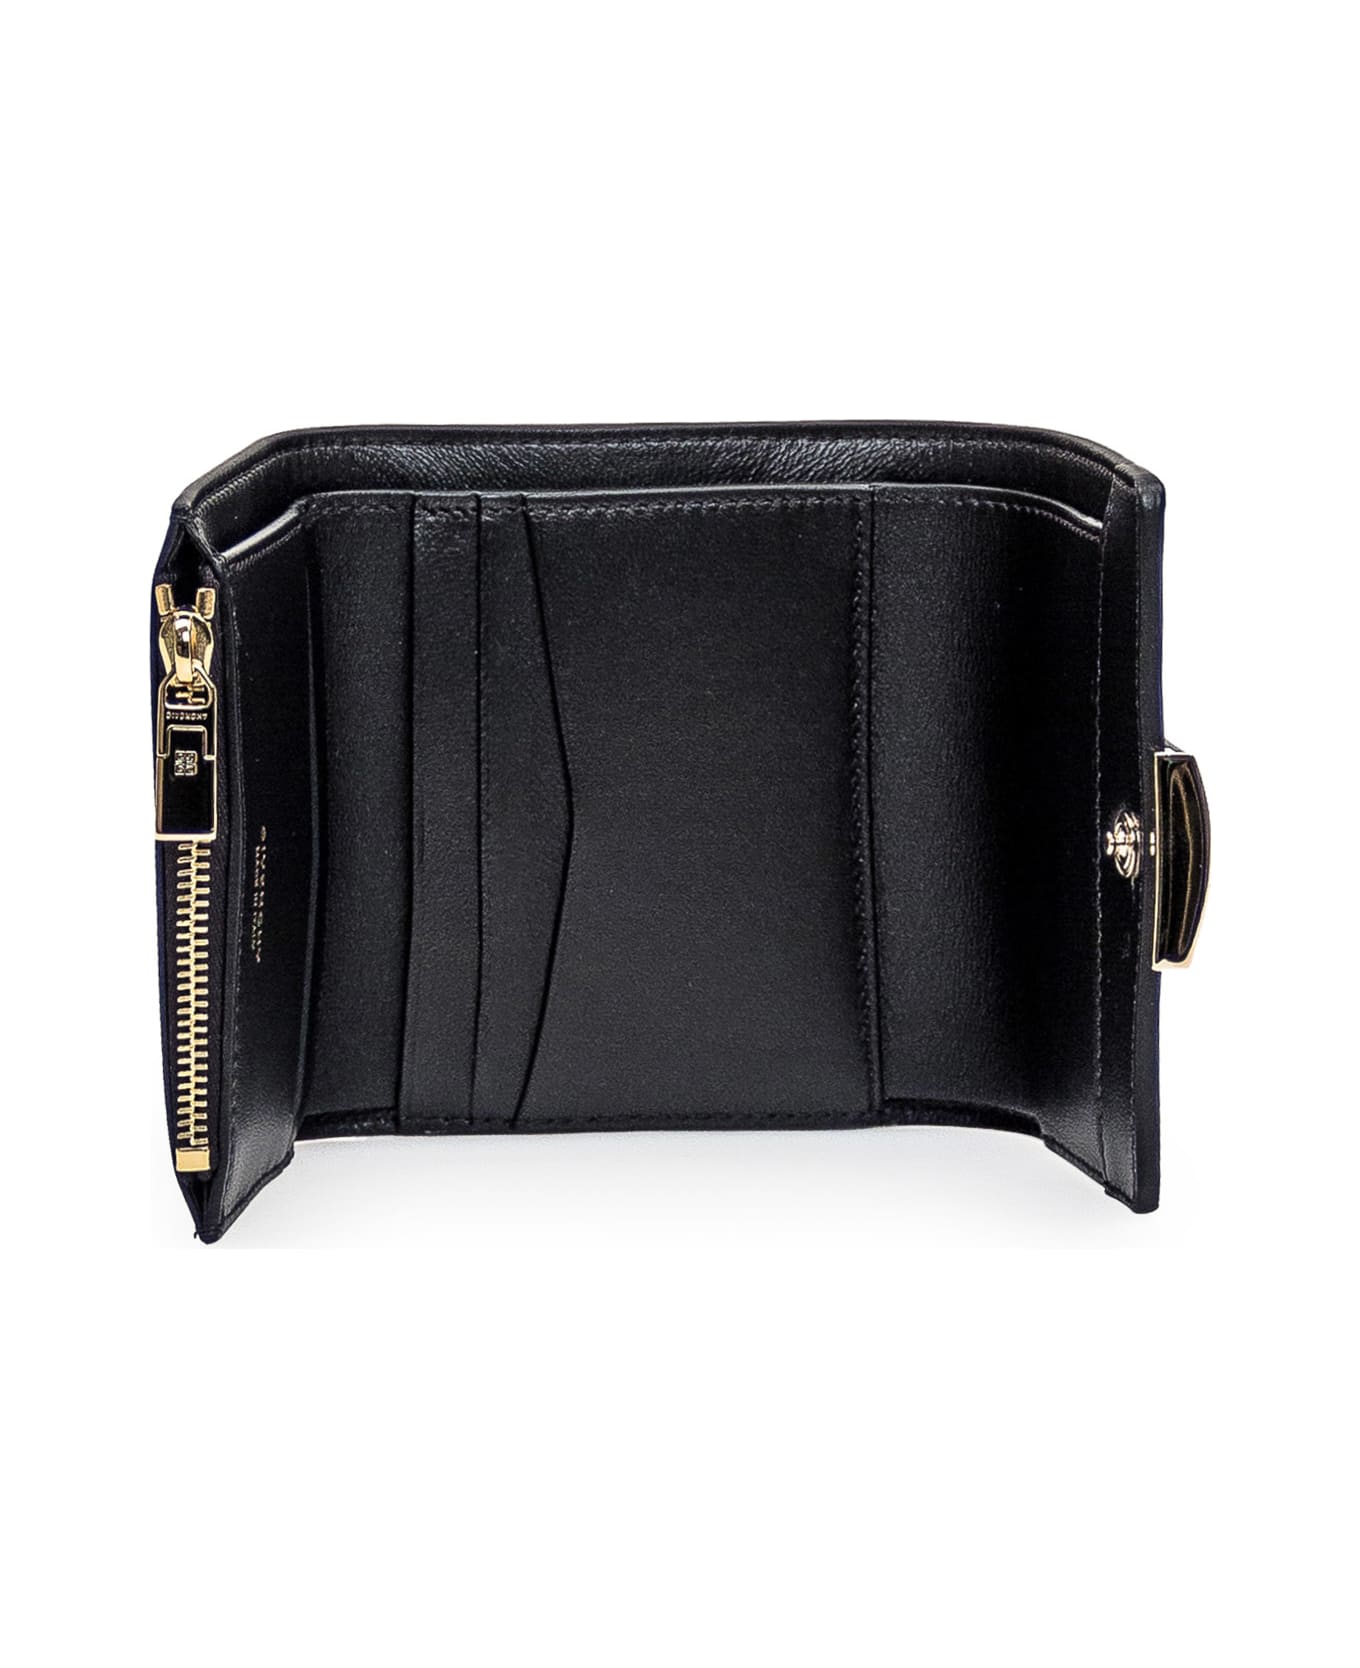 Givenchy 4g Tri-fold Wallet - BLACK 財布